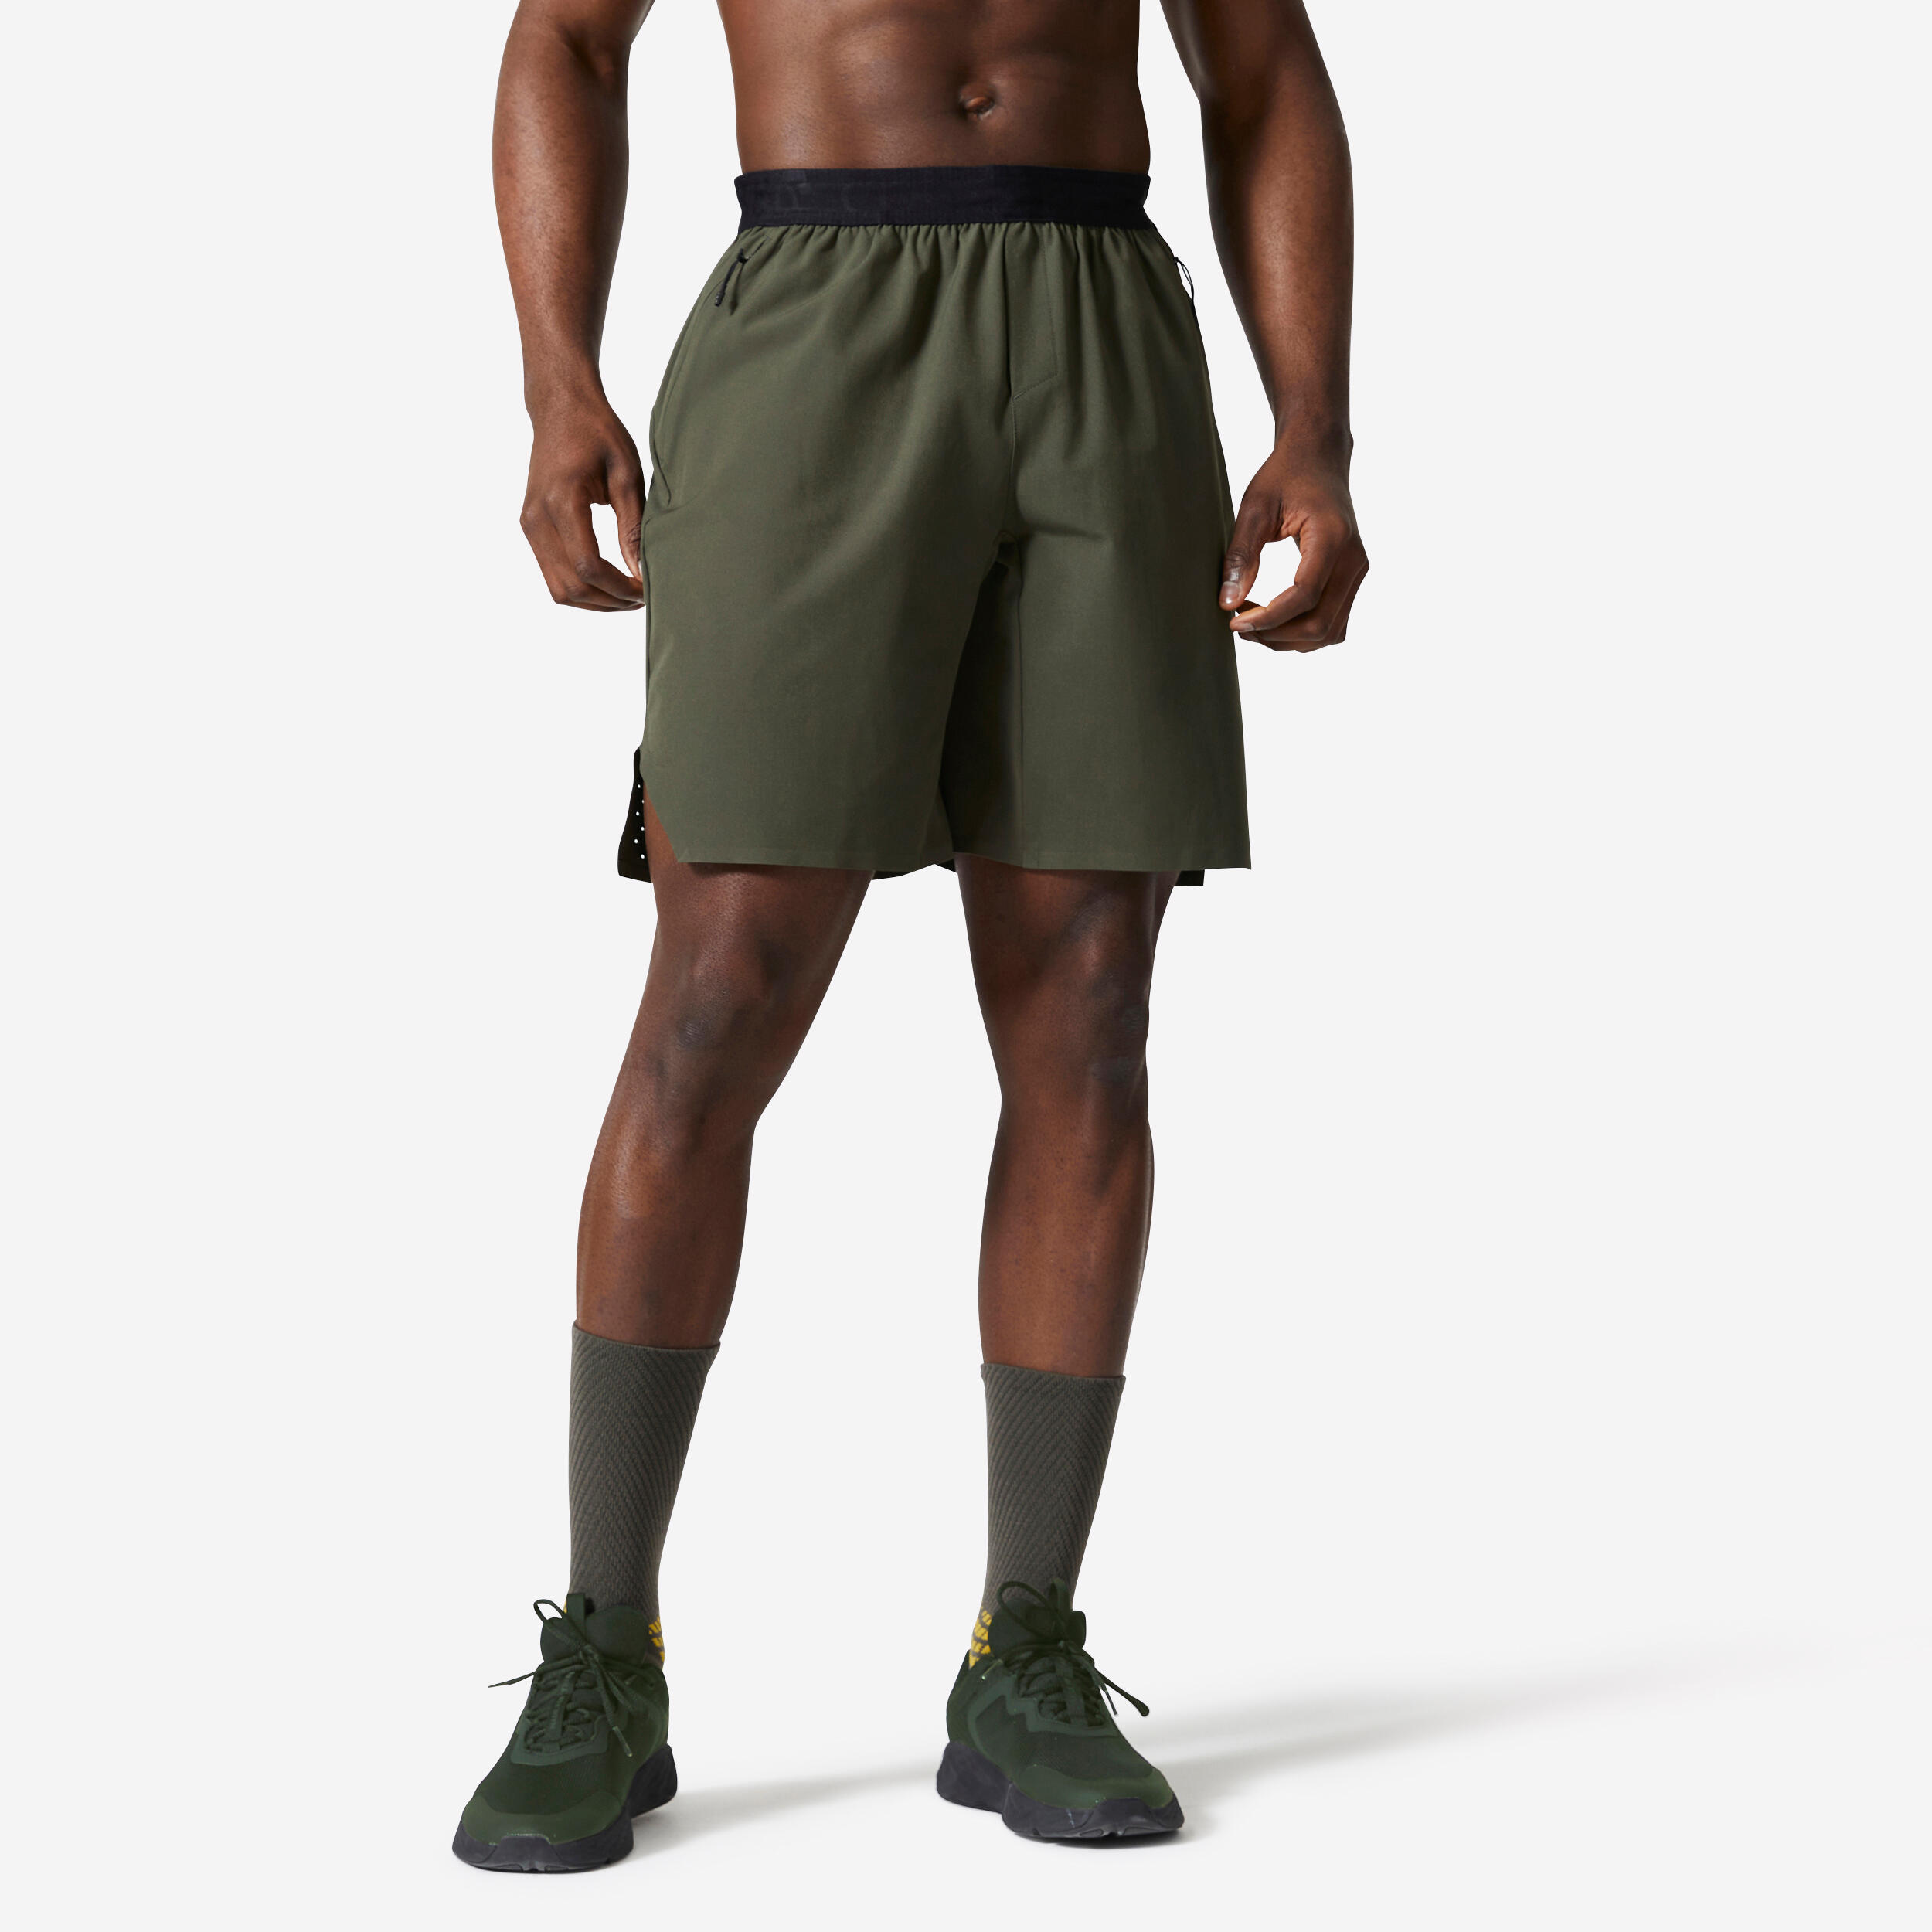 Men's Breathable Performance Cross Training Shorts with Zipped Pockets - Khaki 1/5